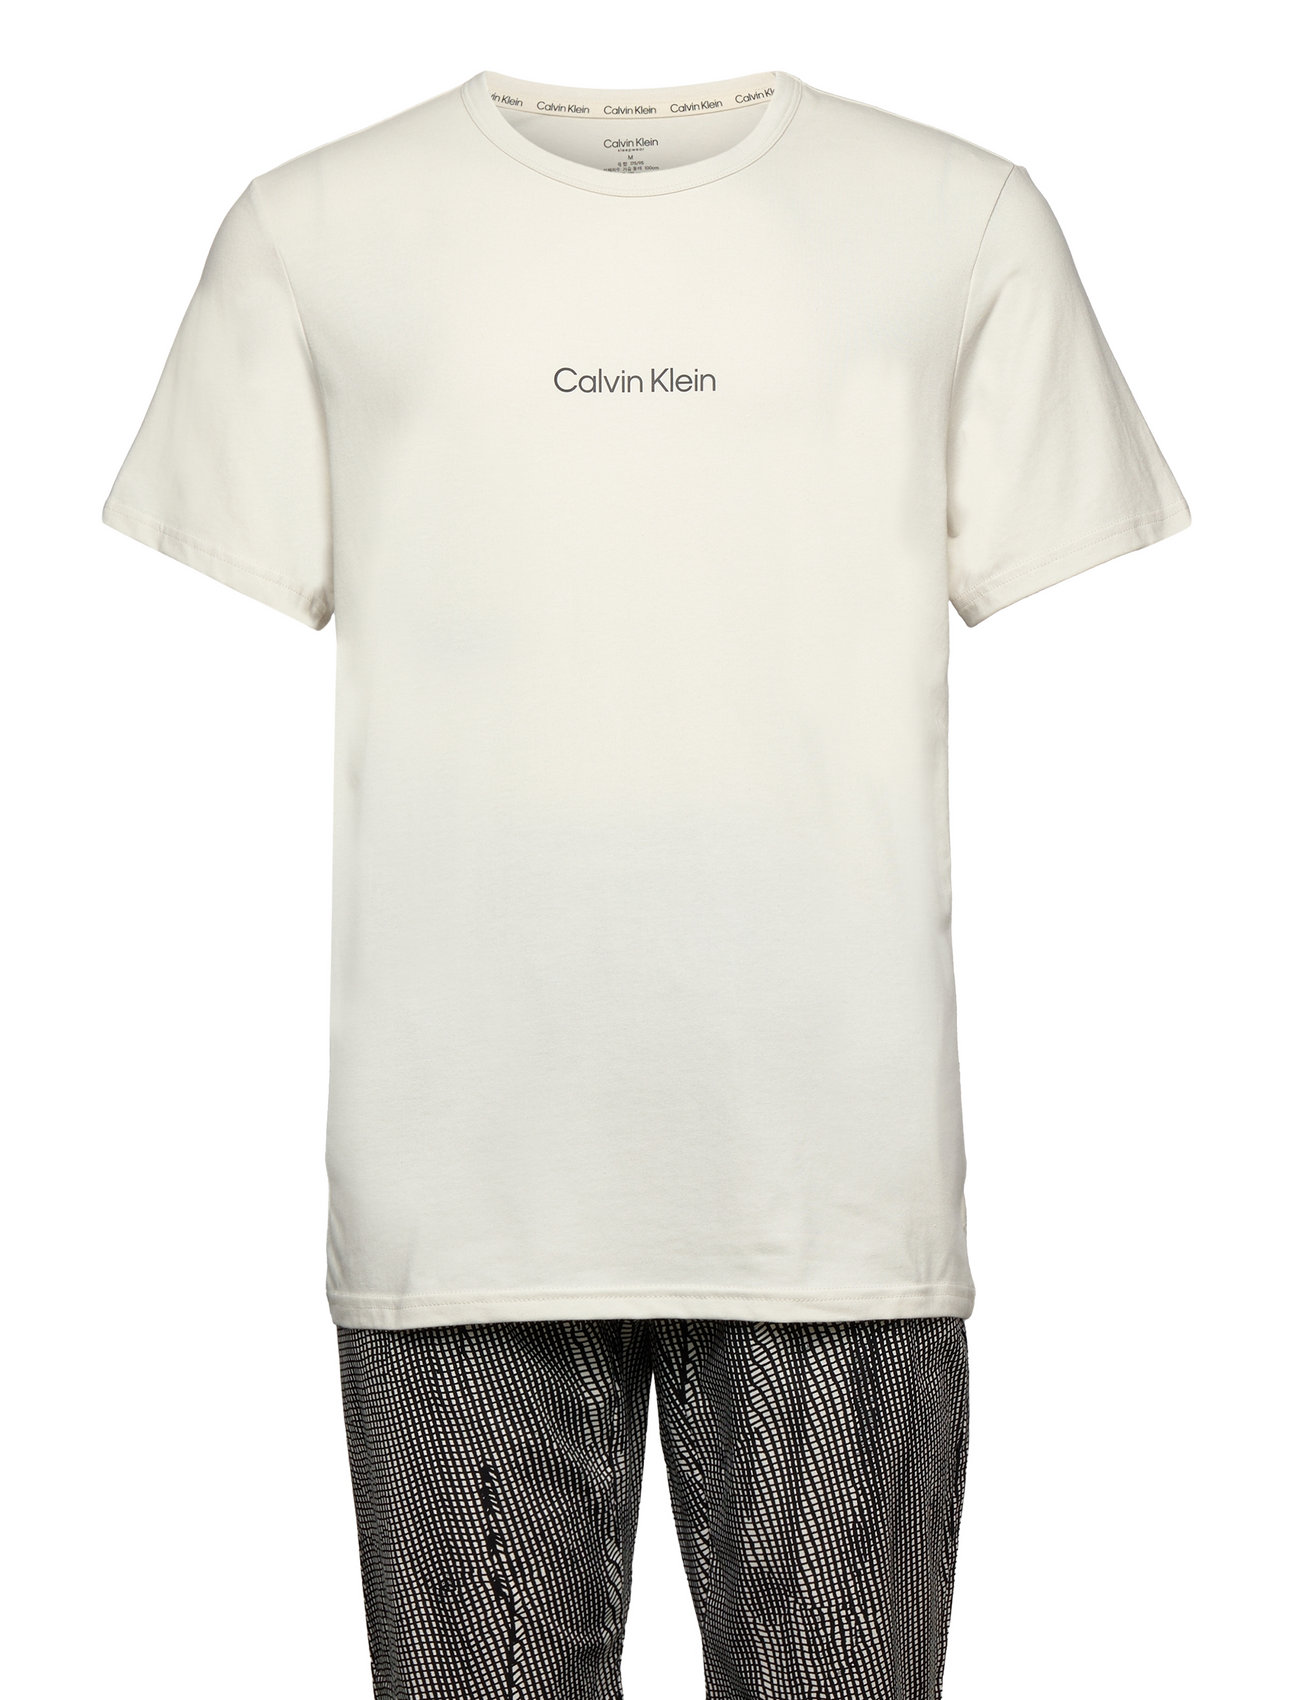 Calvin Klein S/s Pant Set - Pyjamas 